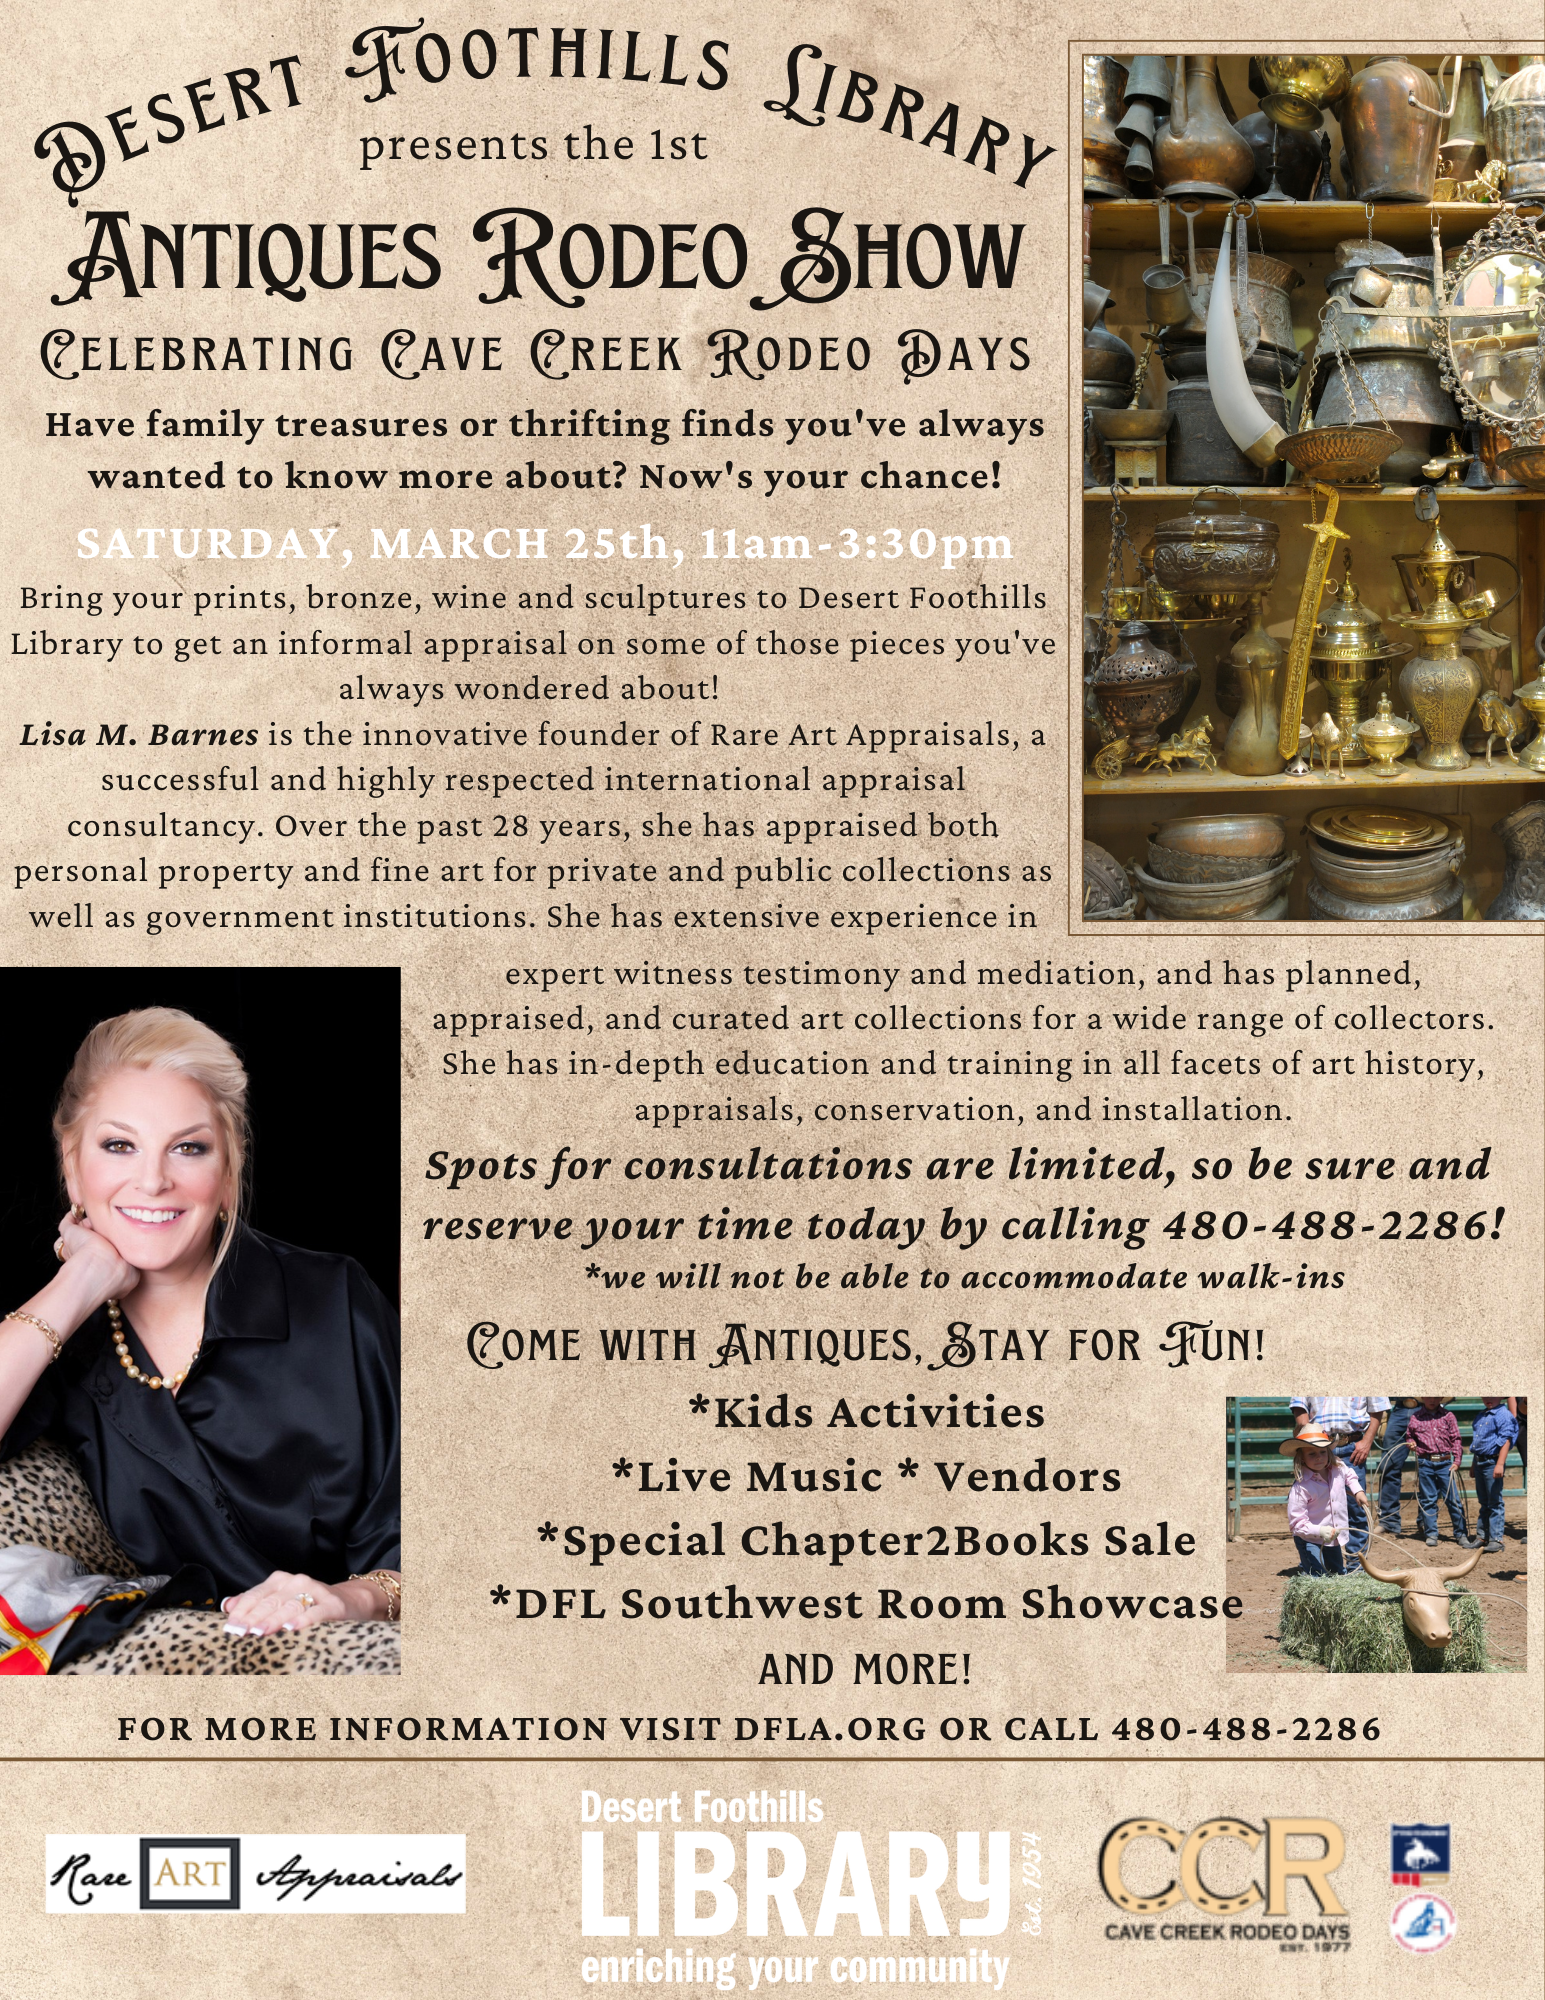 DFL Antiques Rodeo Show